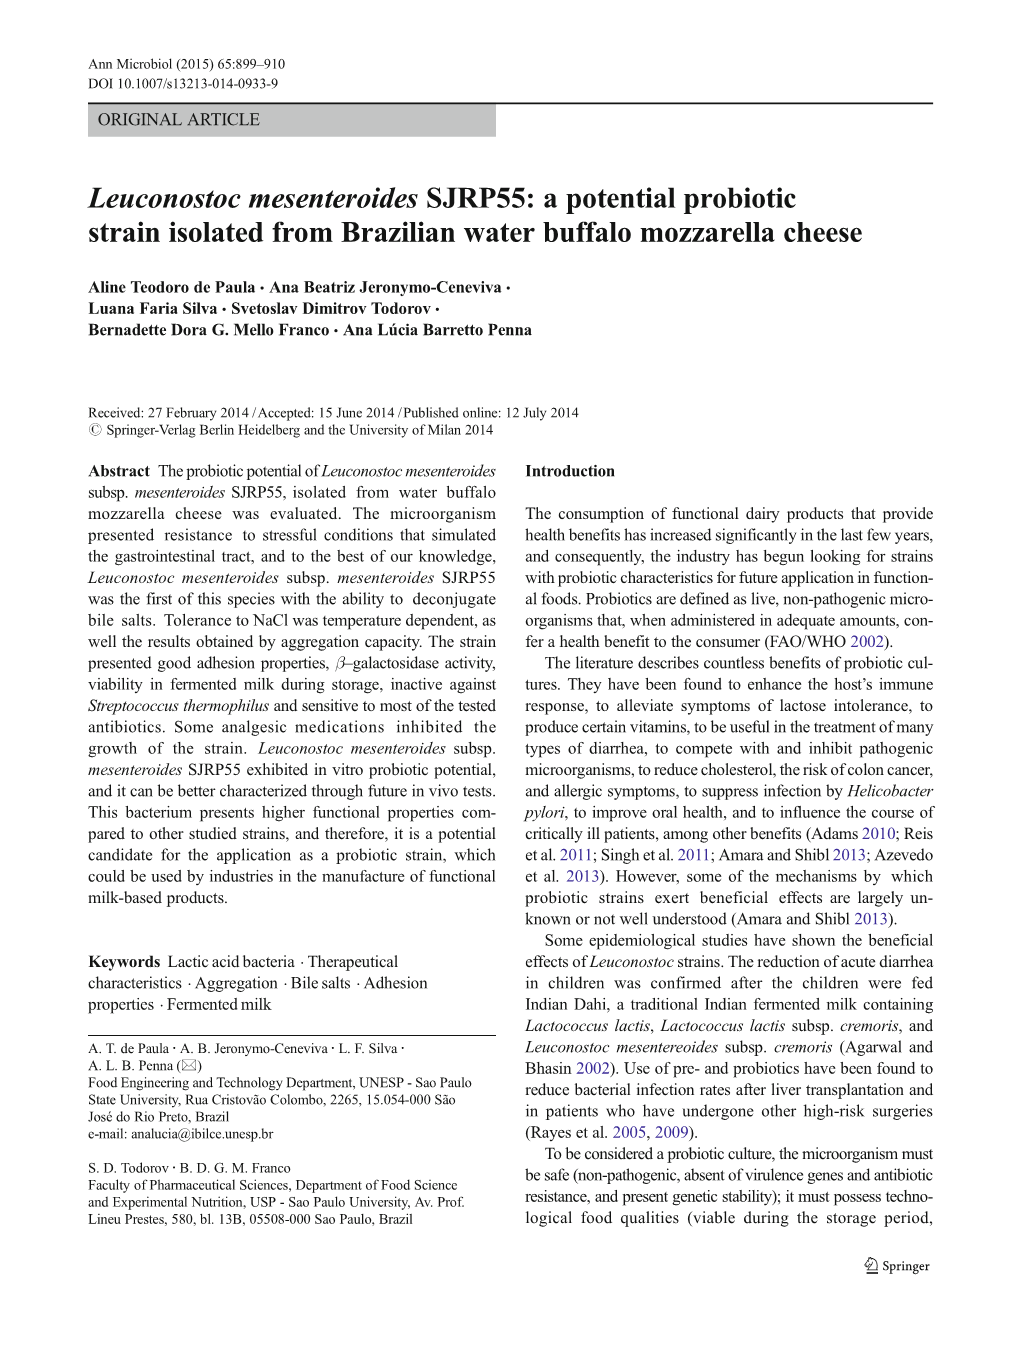 Leuconostoc Mesenteroides SJRP55: a Potential Probiotic Strain Isolated from Brazilian Water Buffalo Mozzarella Cheese